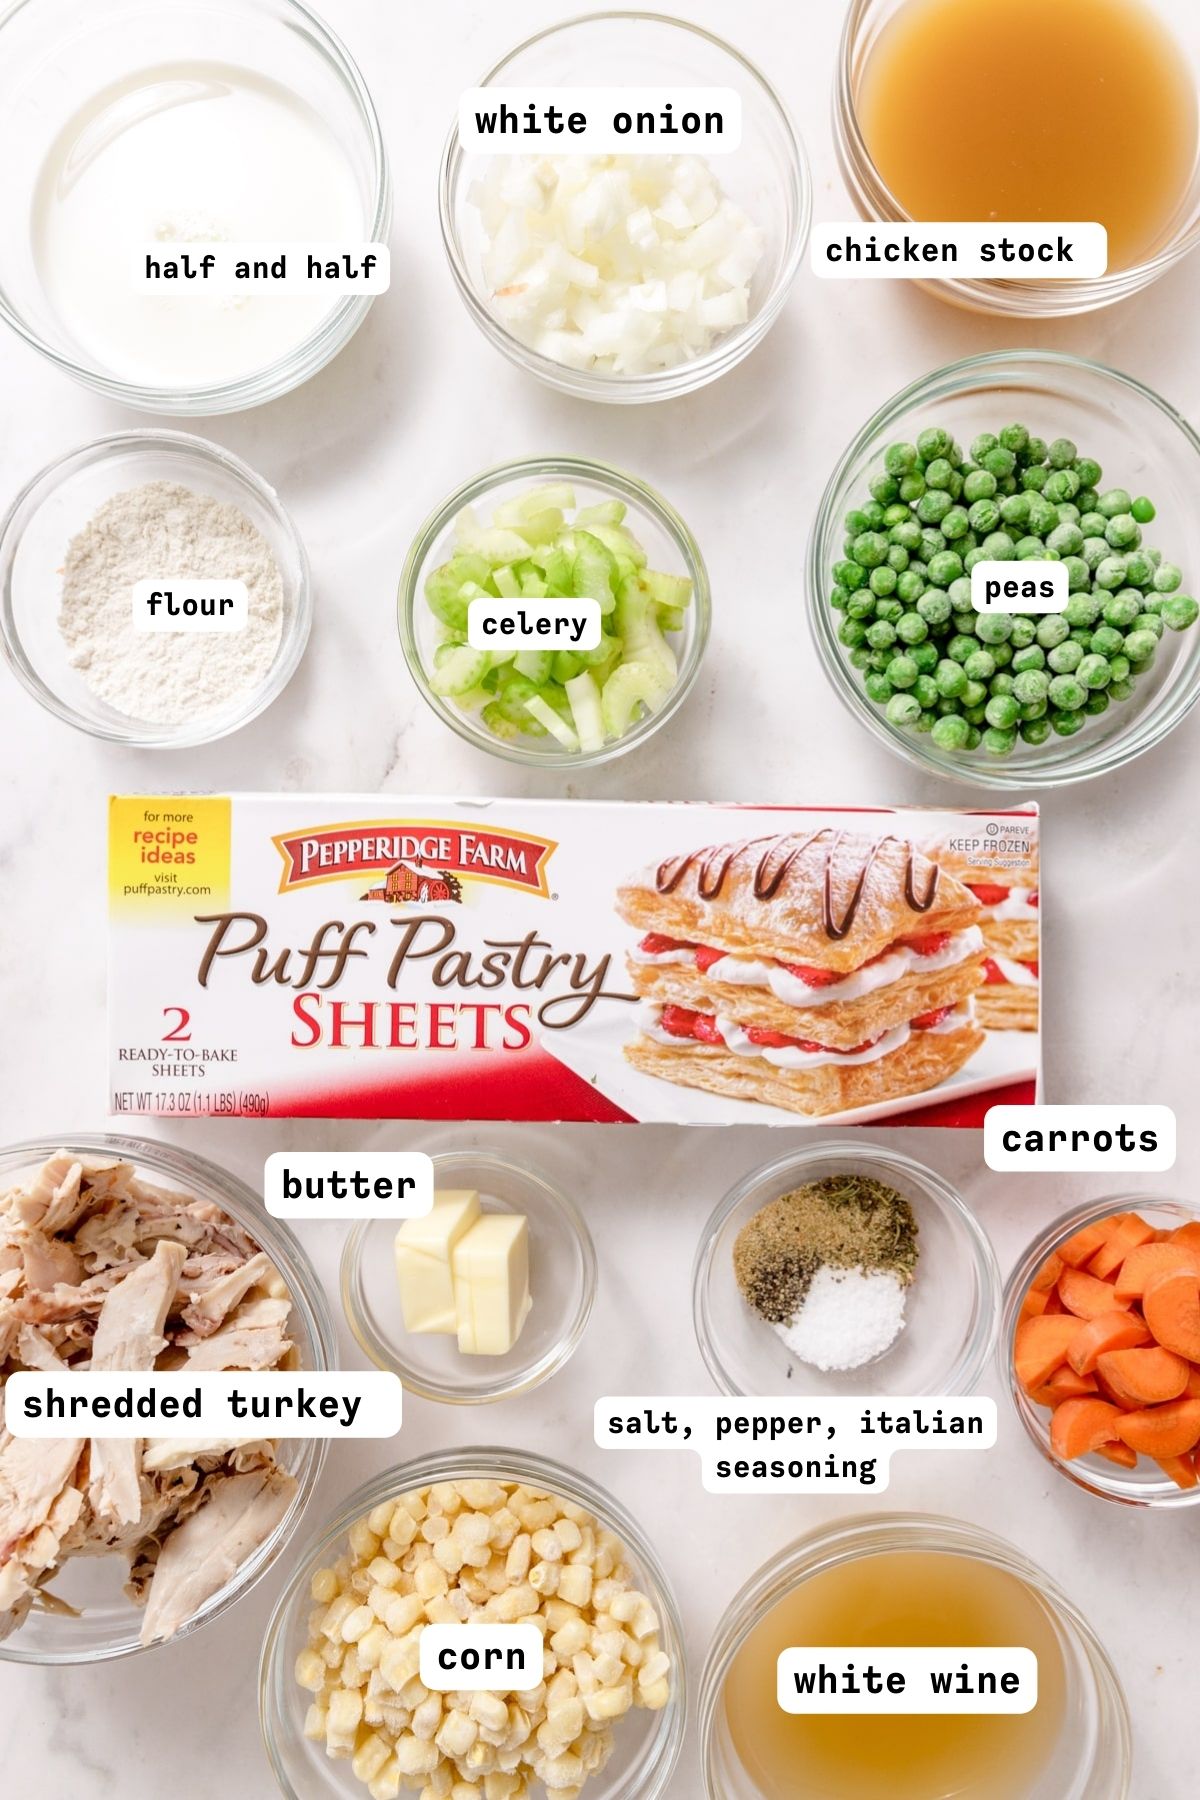 Turkey Pot Pie with Puff Pastry ingredients.